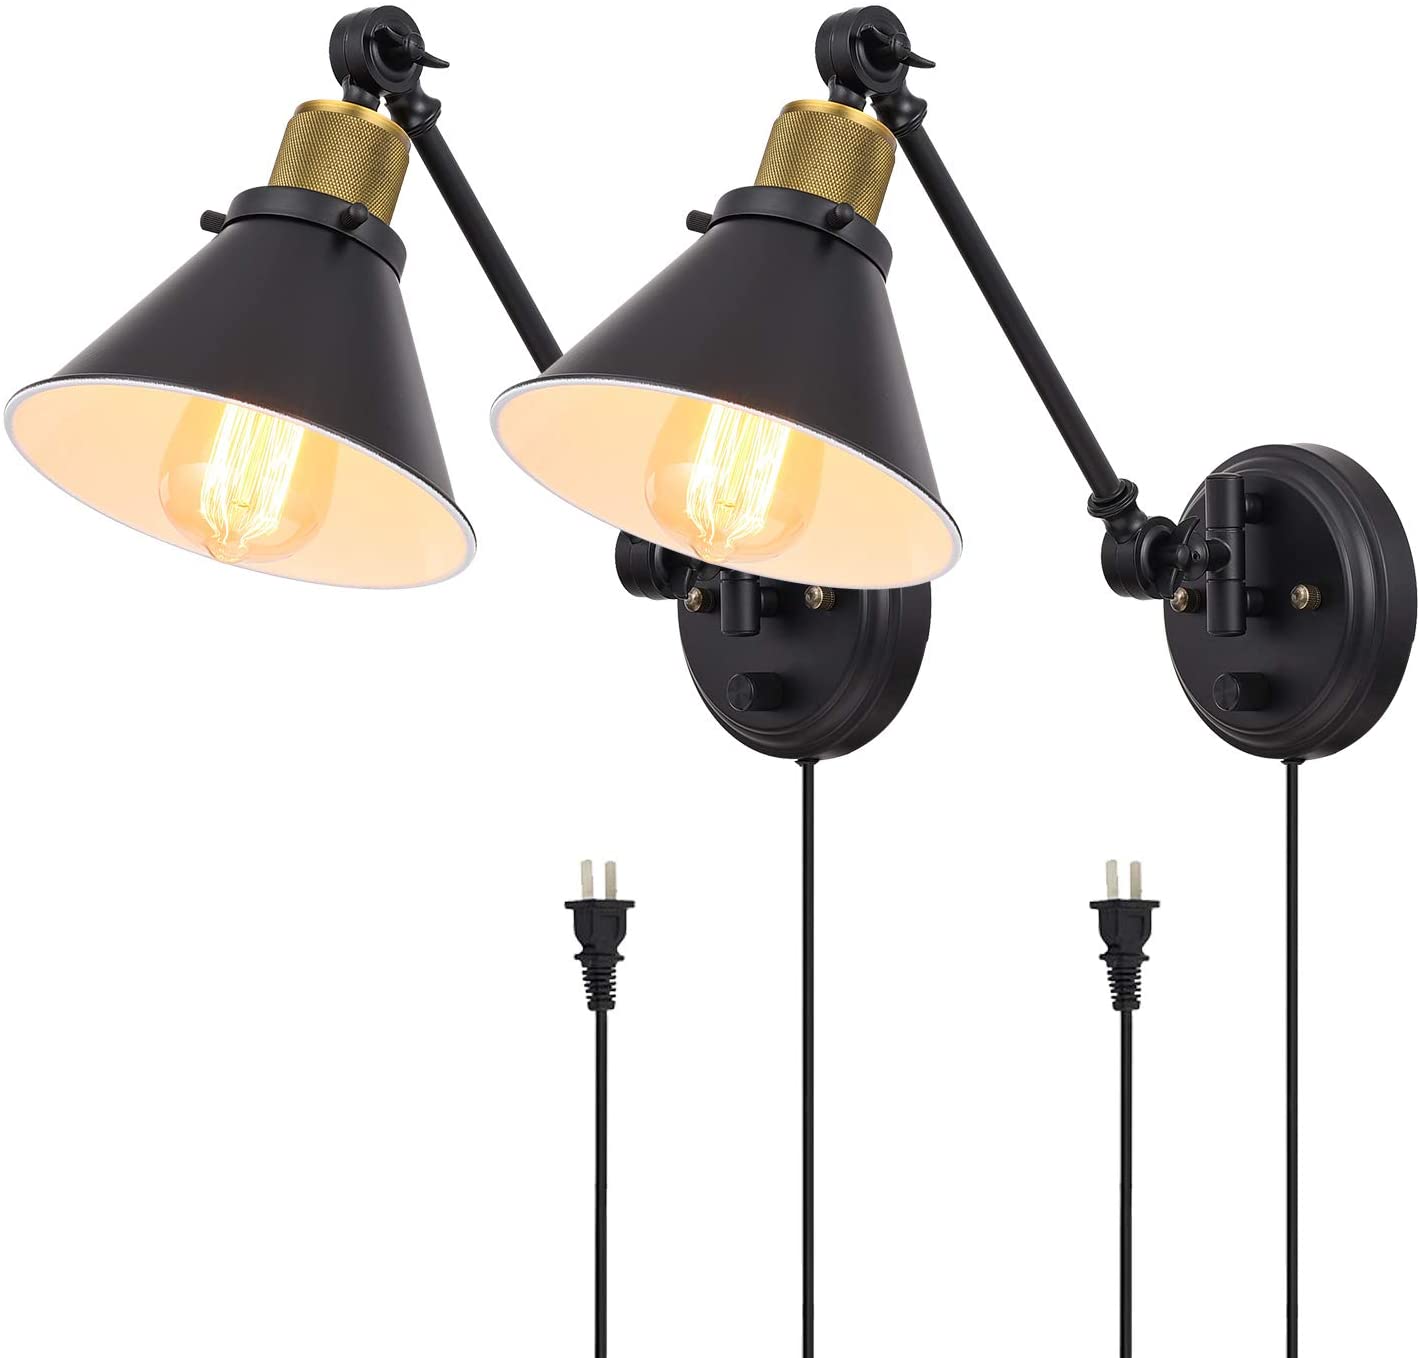 2 wall lamps